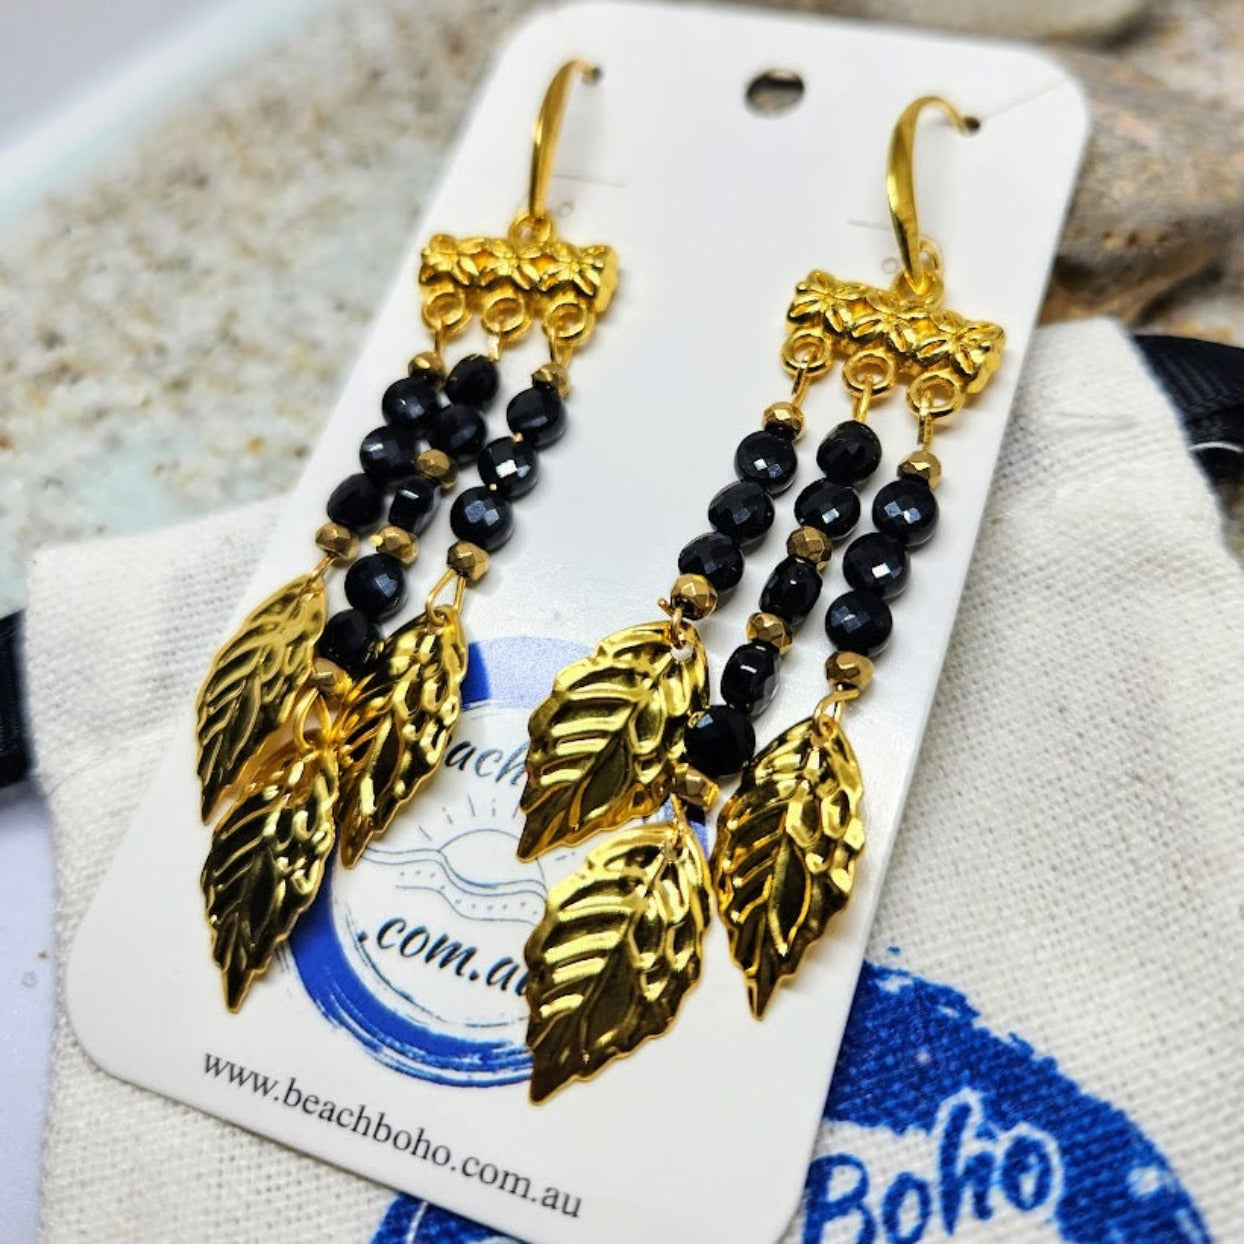 GOLDEN LEAVES - ONYX DANGLE HOOK EARRINGS - Premium earrings from www.beachboho.com.au - Just $45! Shop now at www.beachboho.com.au